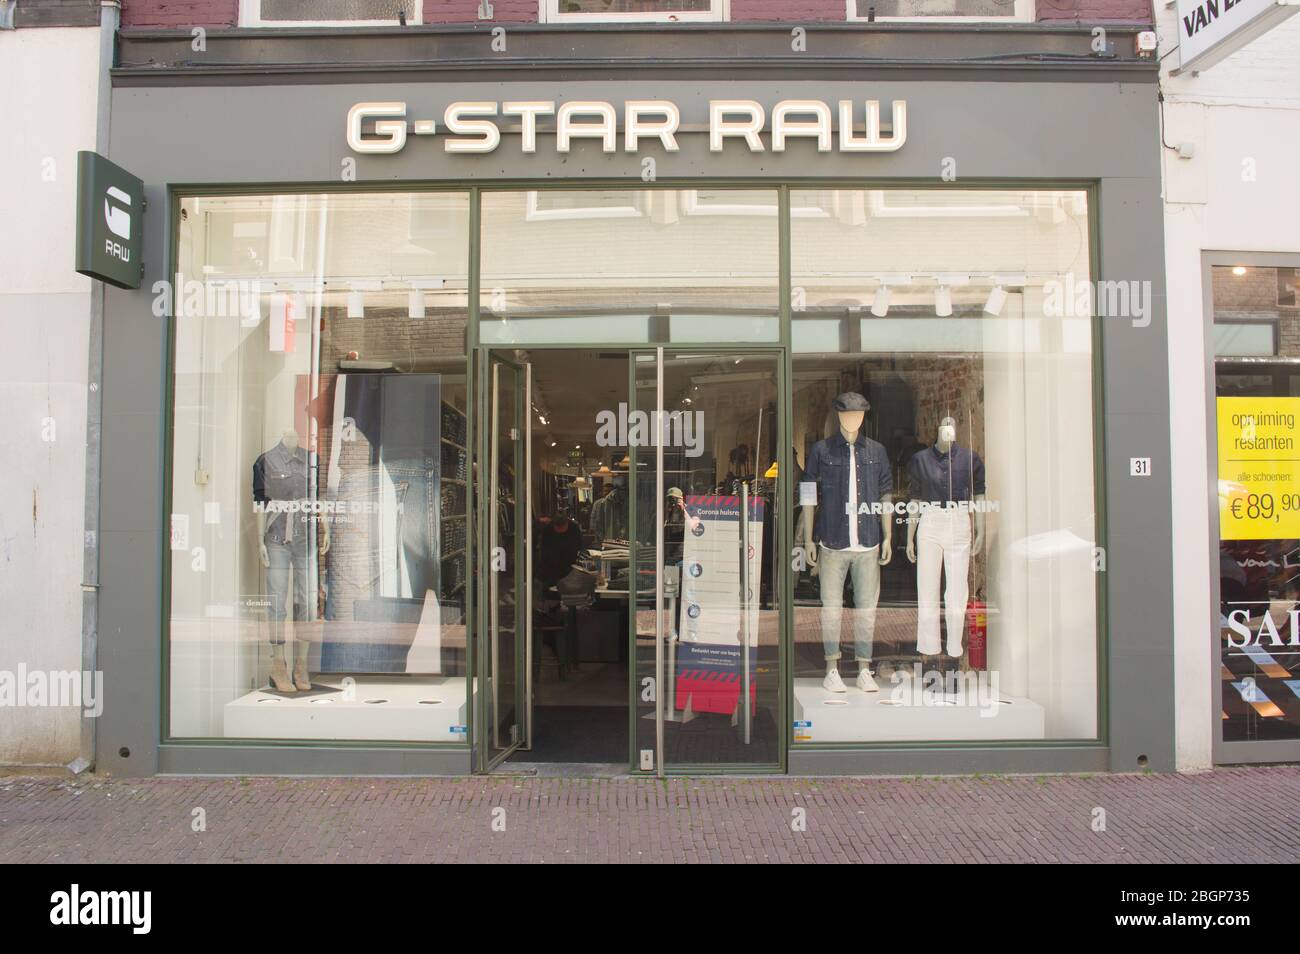 G Star Raw Company Cheapest Purchase, 57% OFF | public-locksmith.com